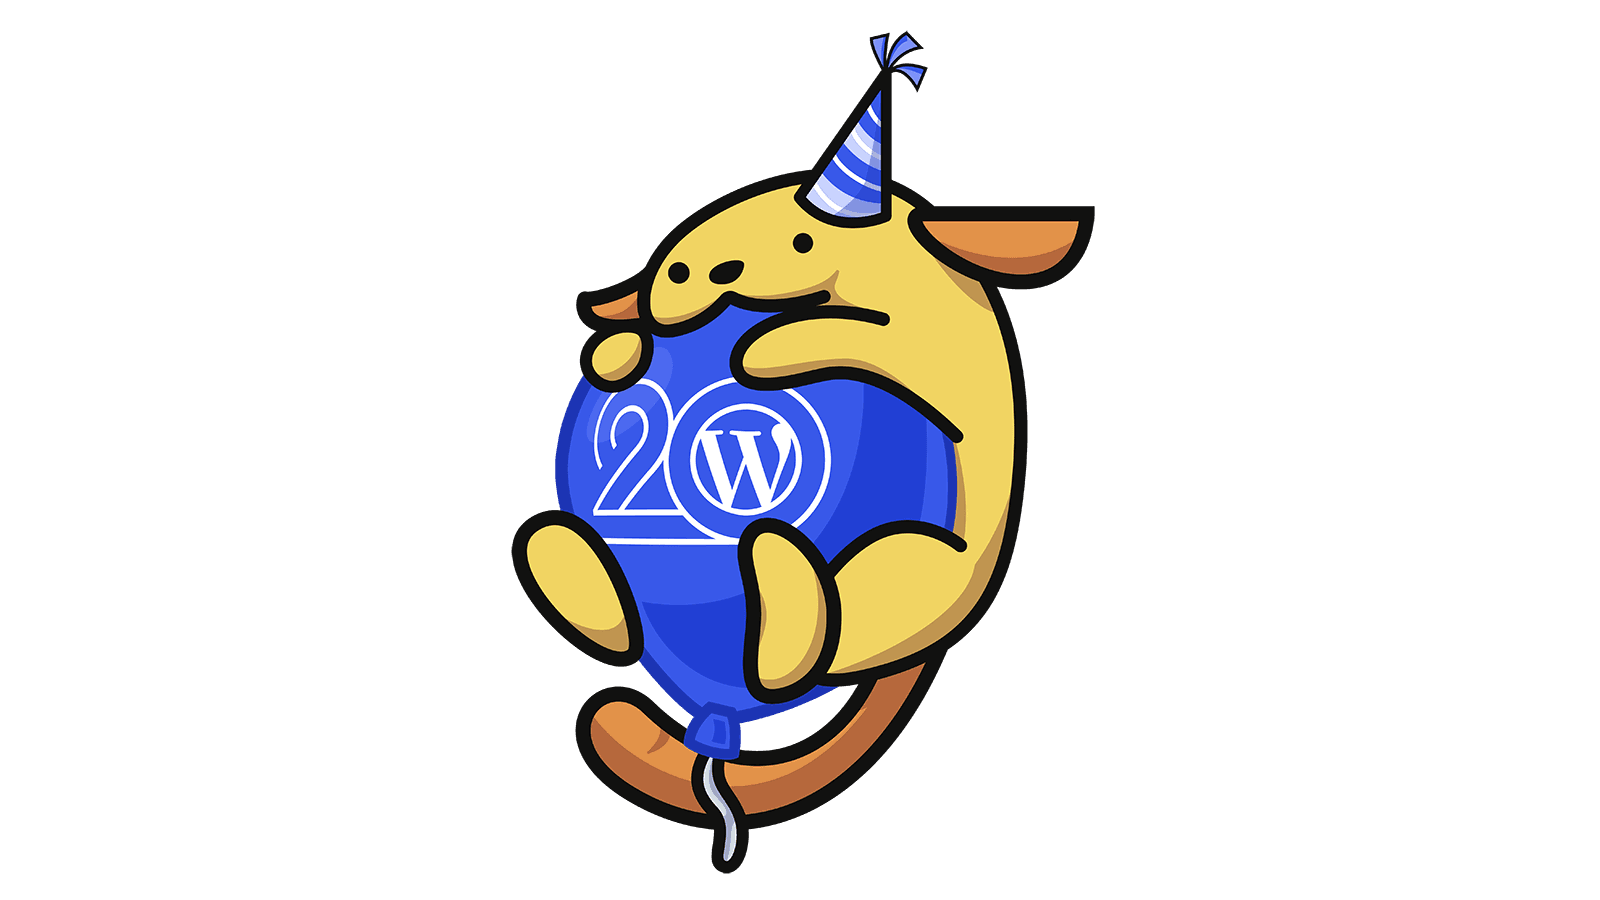 WordPress’s Wapuu Joins the #WP20 Celebration